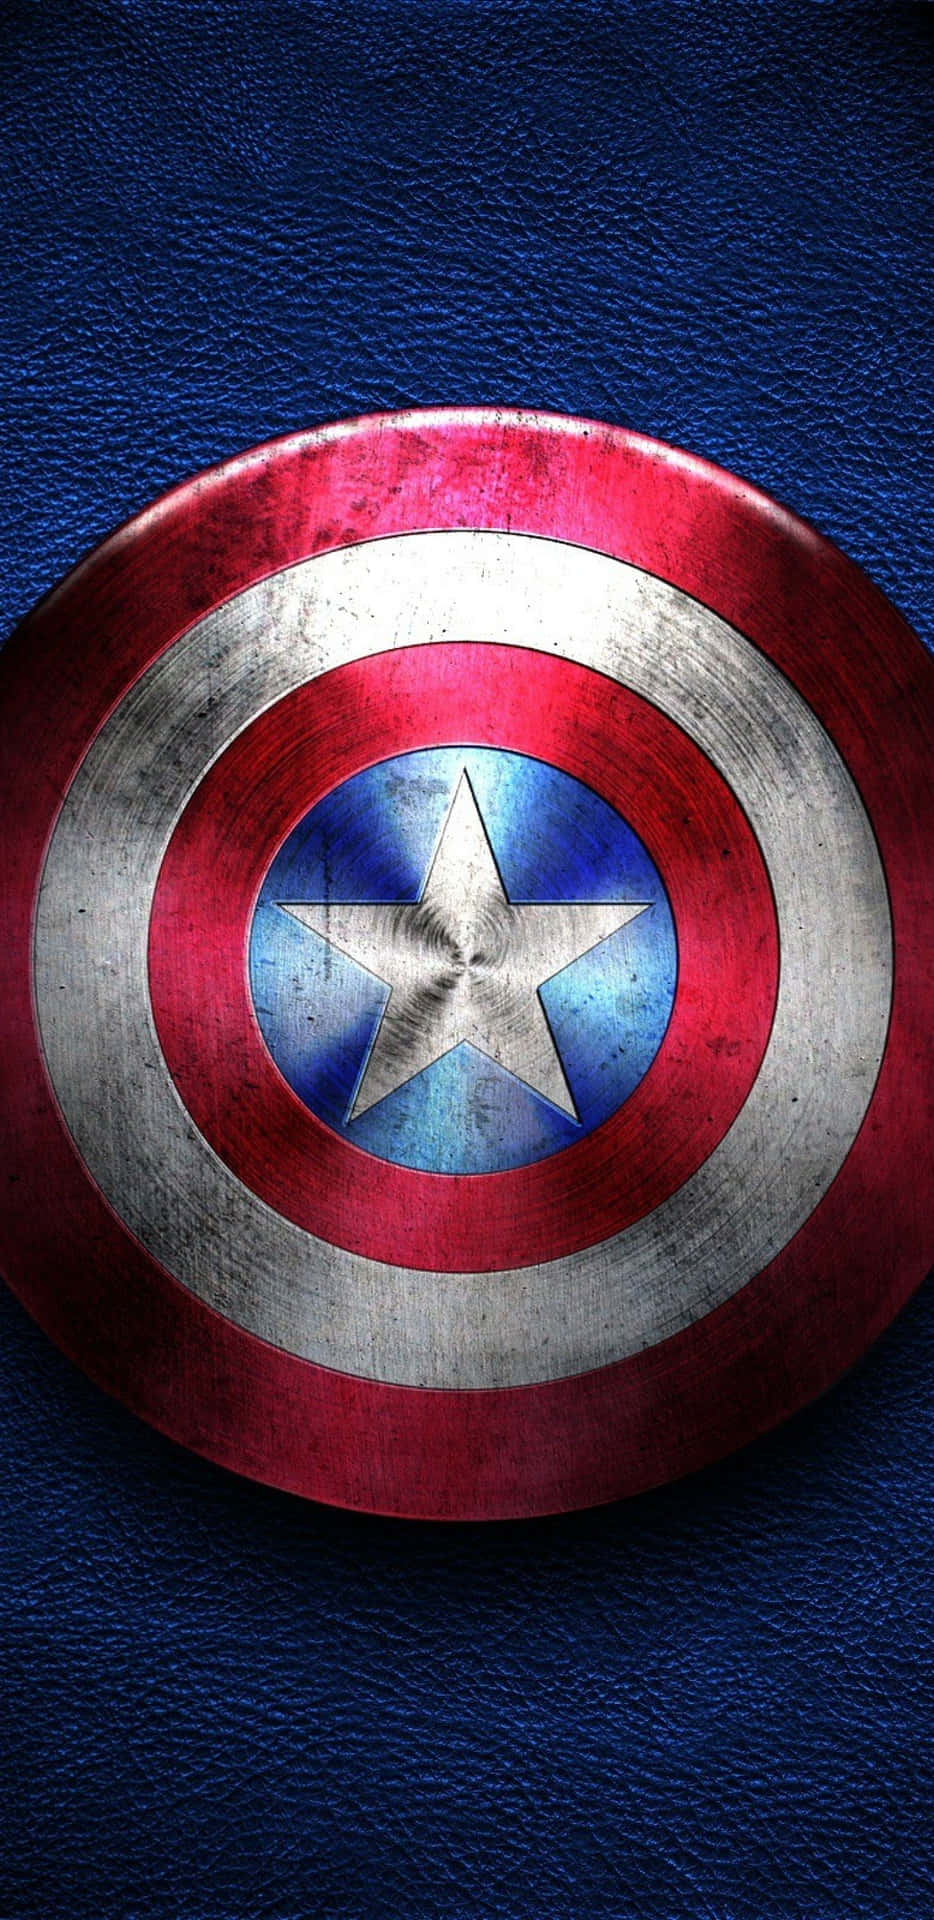 Pixel 3xl Captain America baggrund skjold